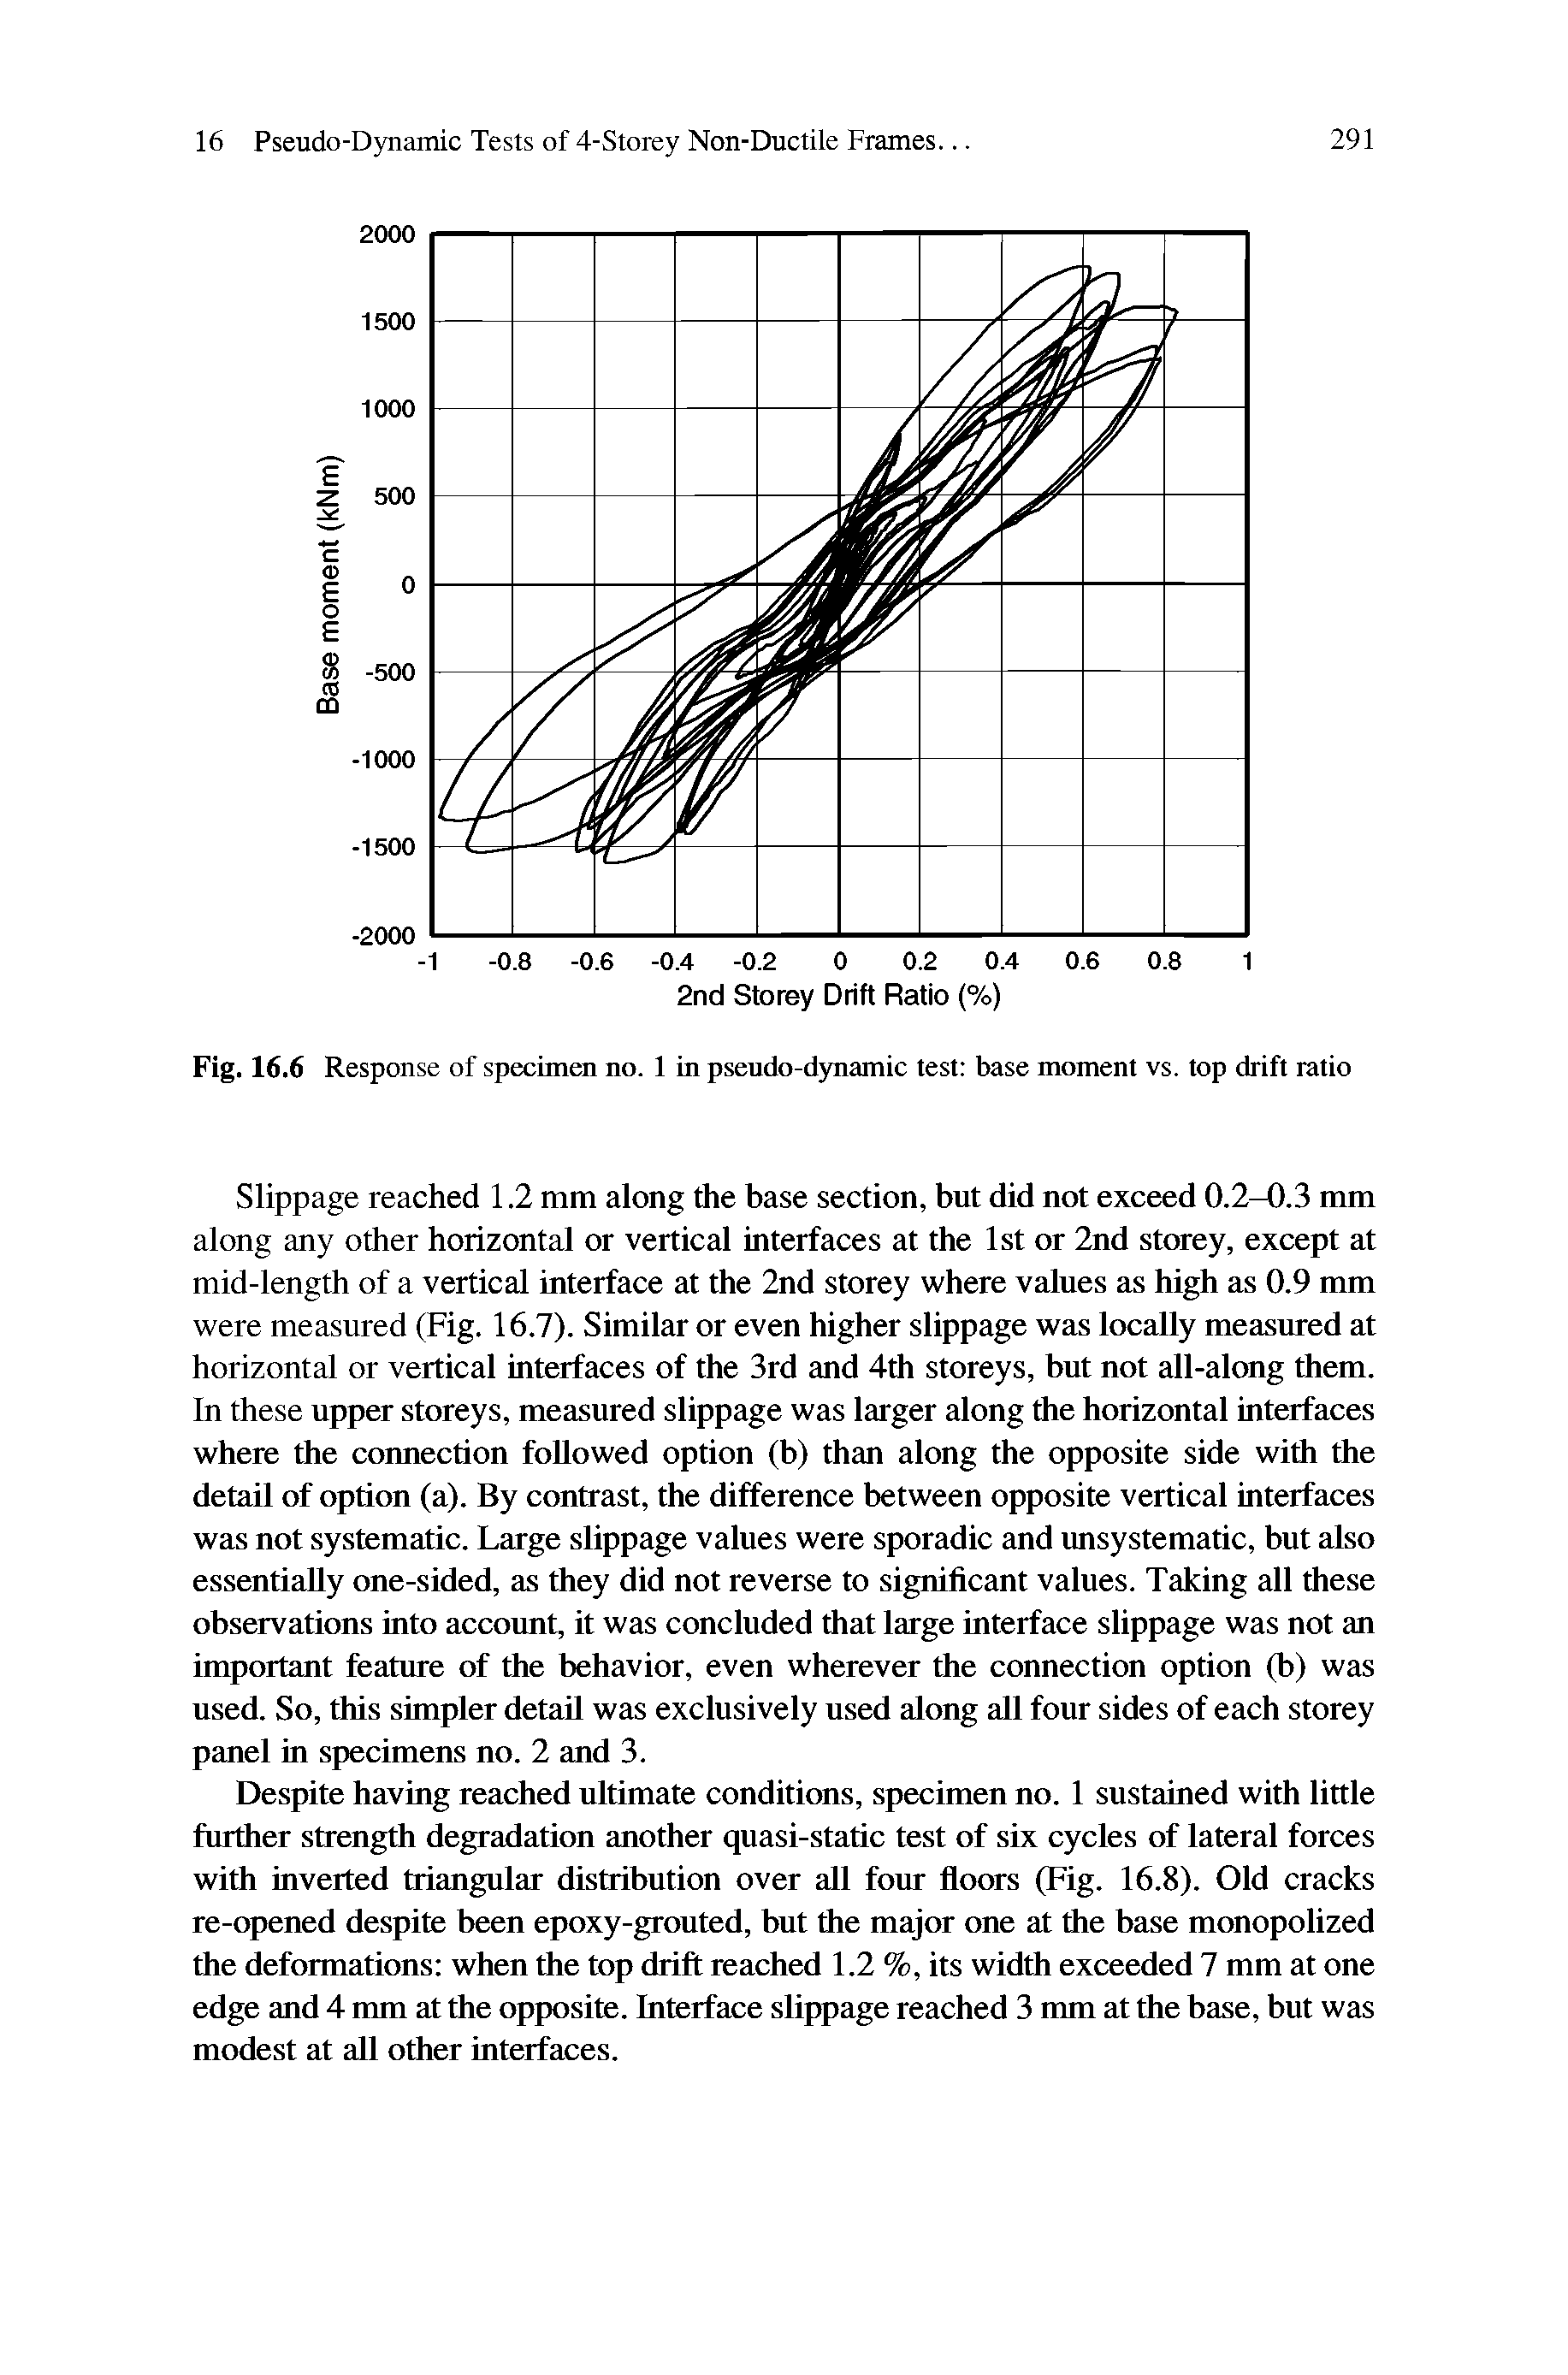 Fig. 16.6 Response of specimen no. 1 in pseudo-dynamic test base moment vs. top drift ratio...